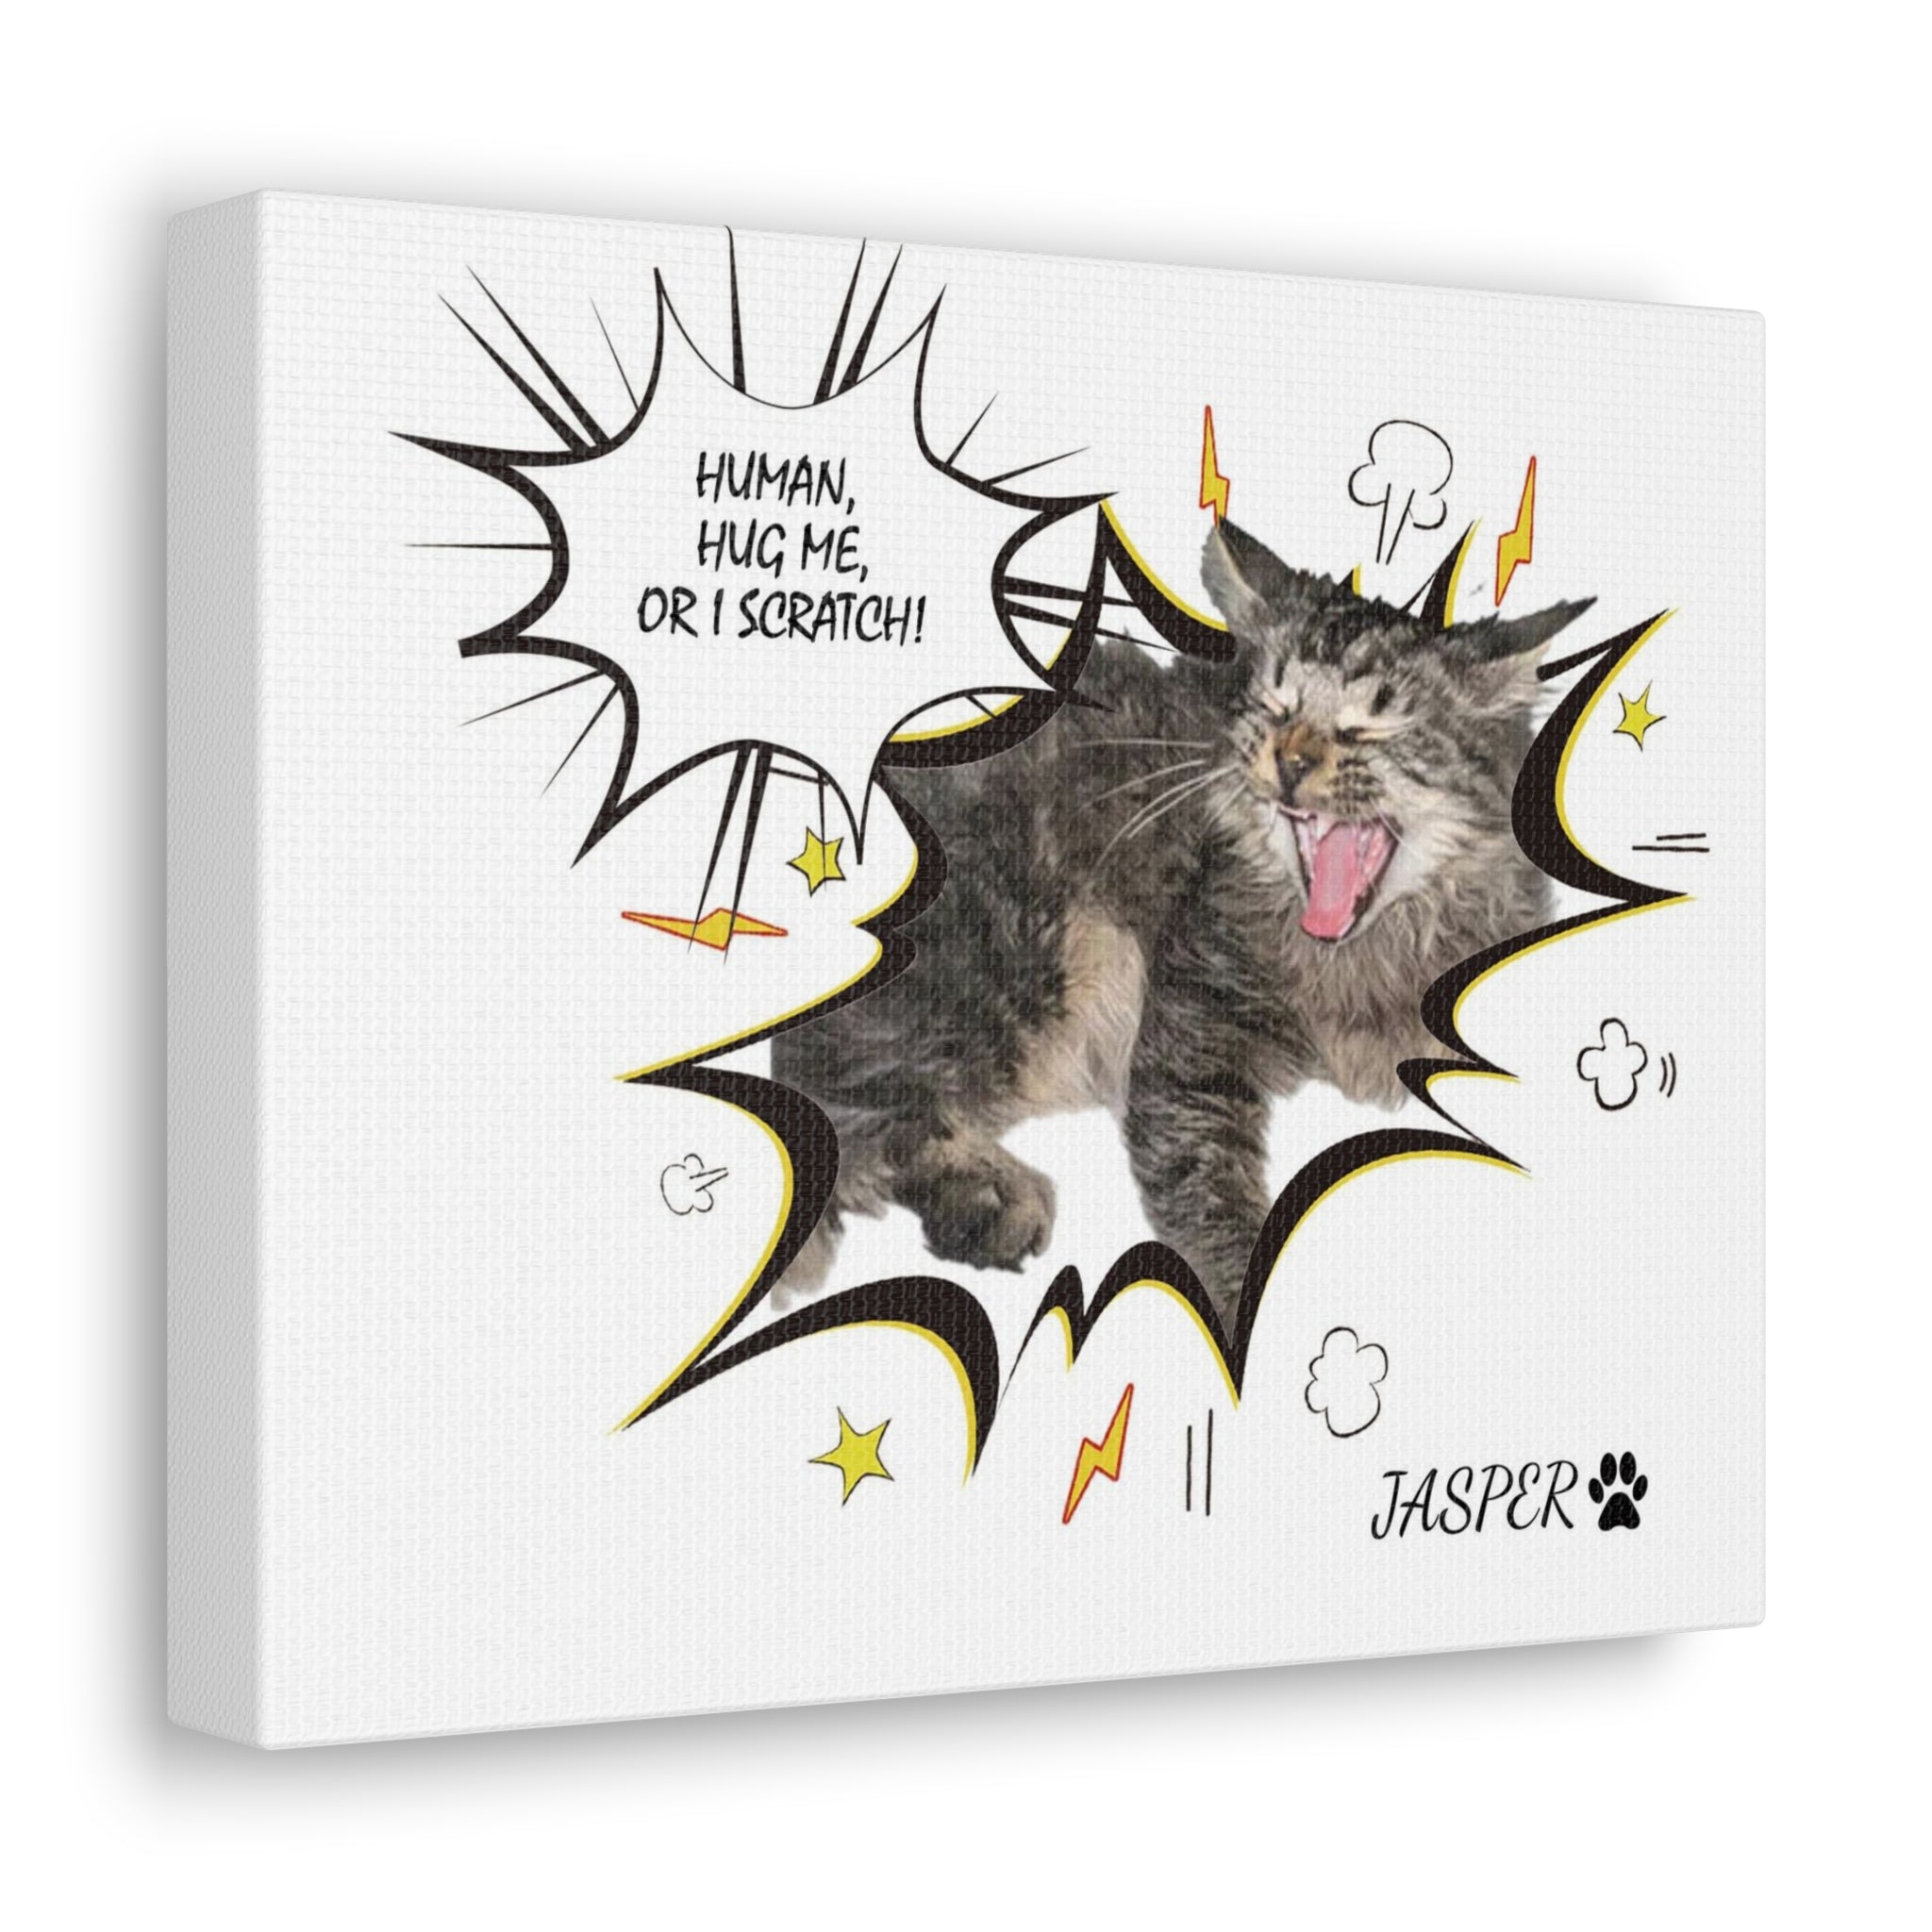 Cat Portrait with Thunder - Personalized Pet Portrait Gifts Canvas Prints